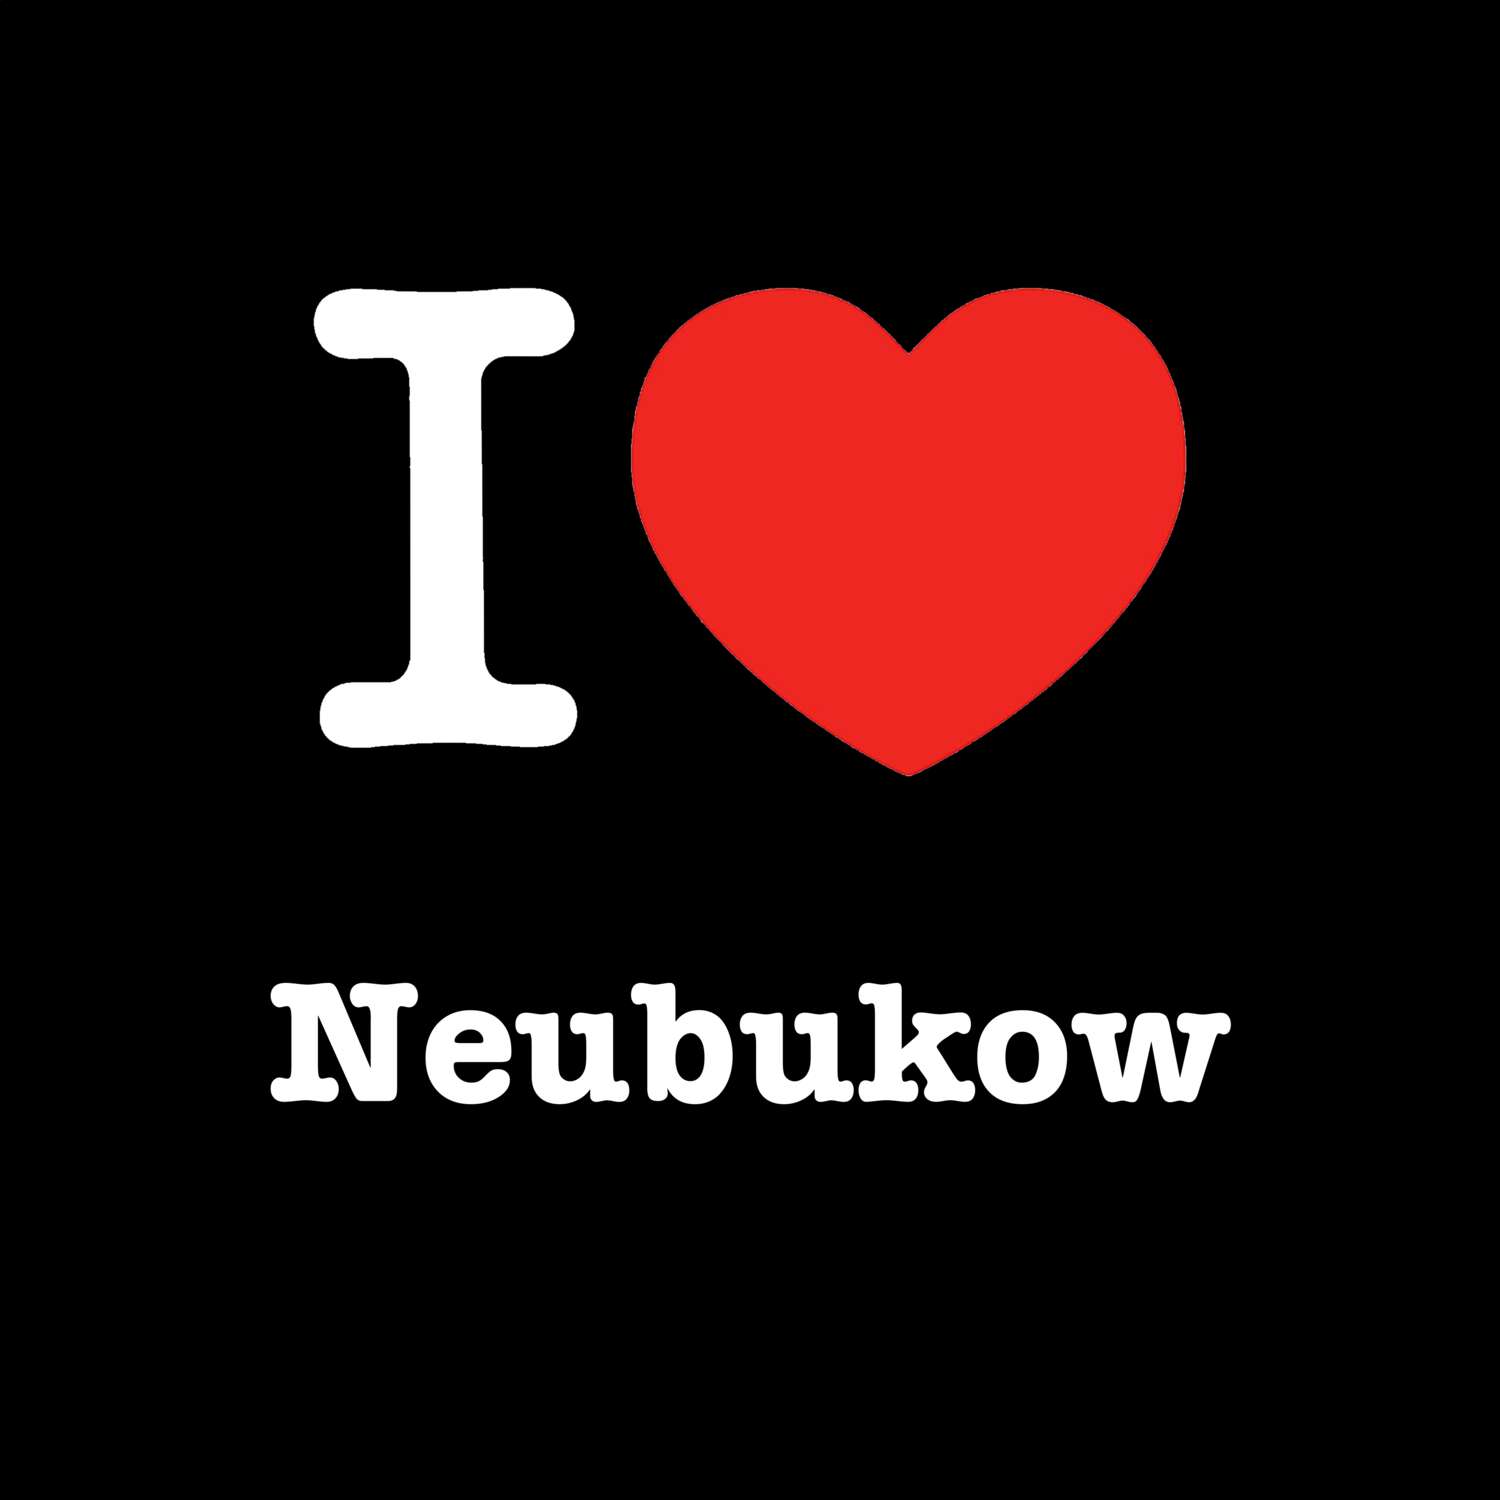 Neubukow T-Shirt »I love«